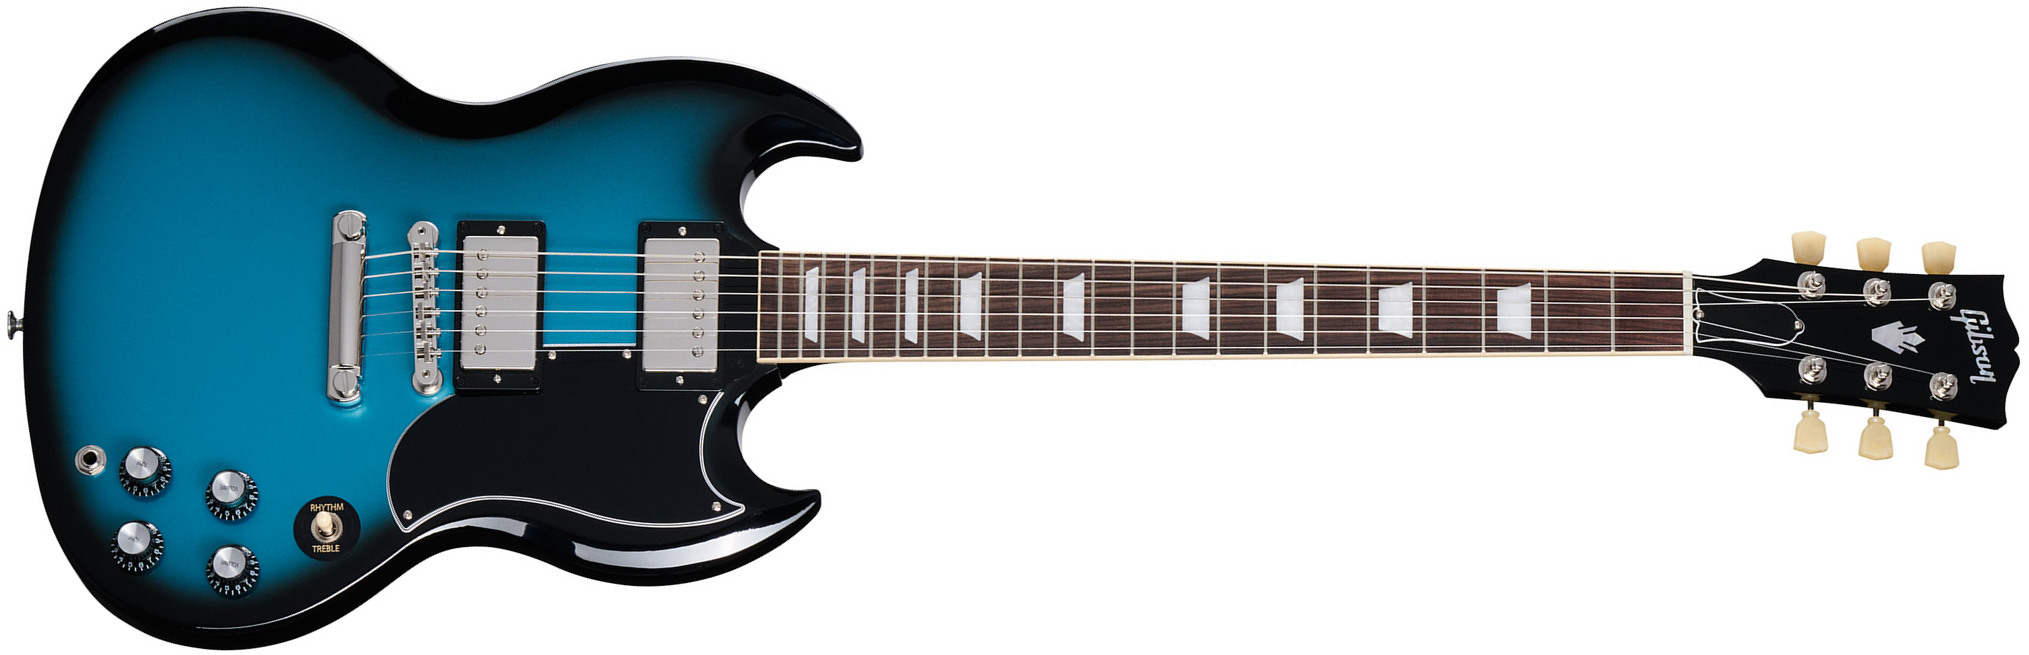 Gibson Sg Standard 1961 Custom Color 2h Ht Rw - Pelham Blue Burst - Double cut electric guitar - Main picture